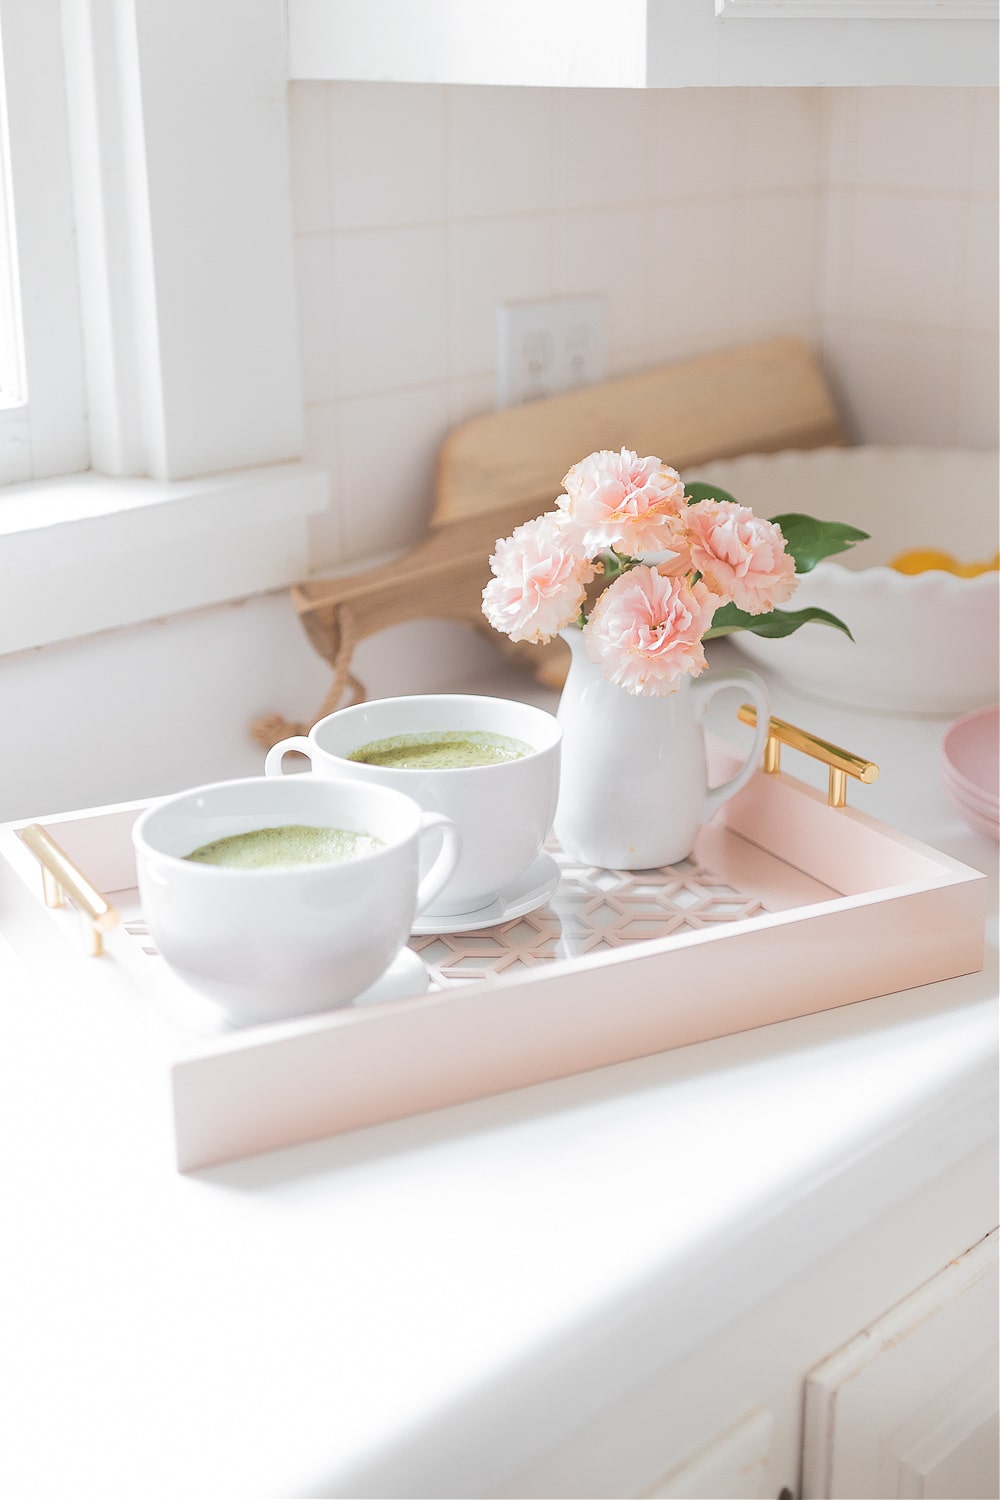 Matcha green tea latte recipe by blogger Stephanie Ziajka on Diary of a Debutante